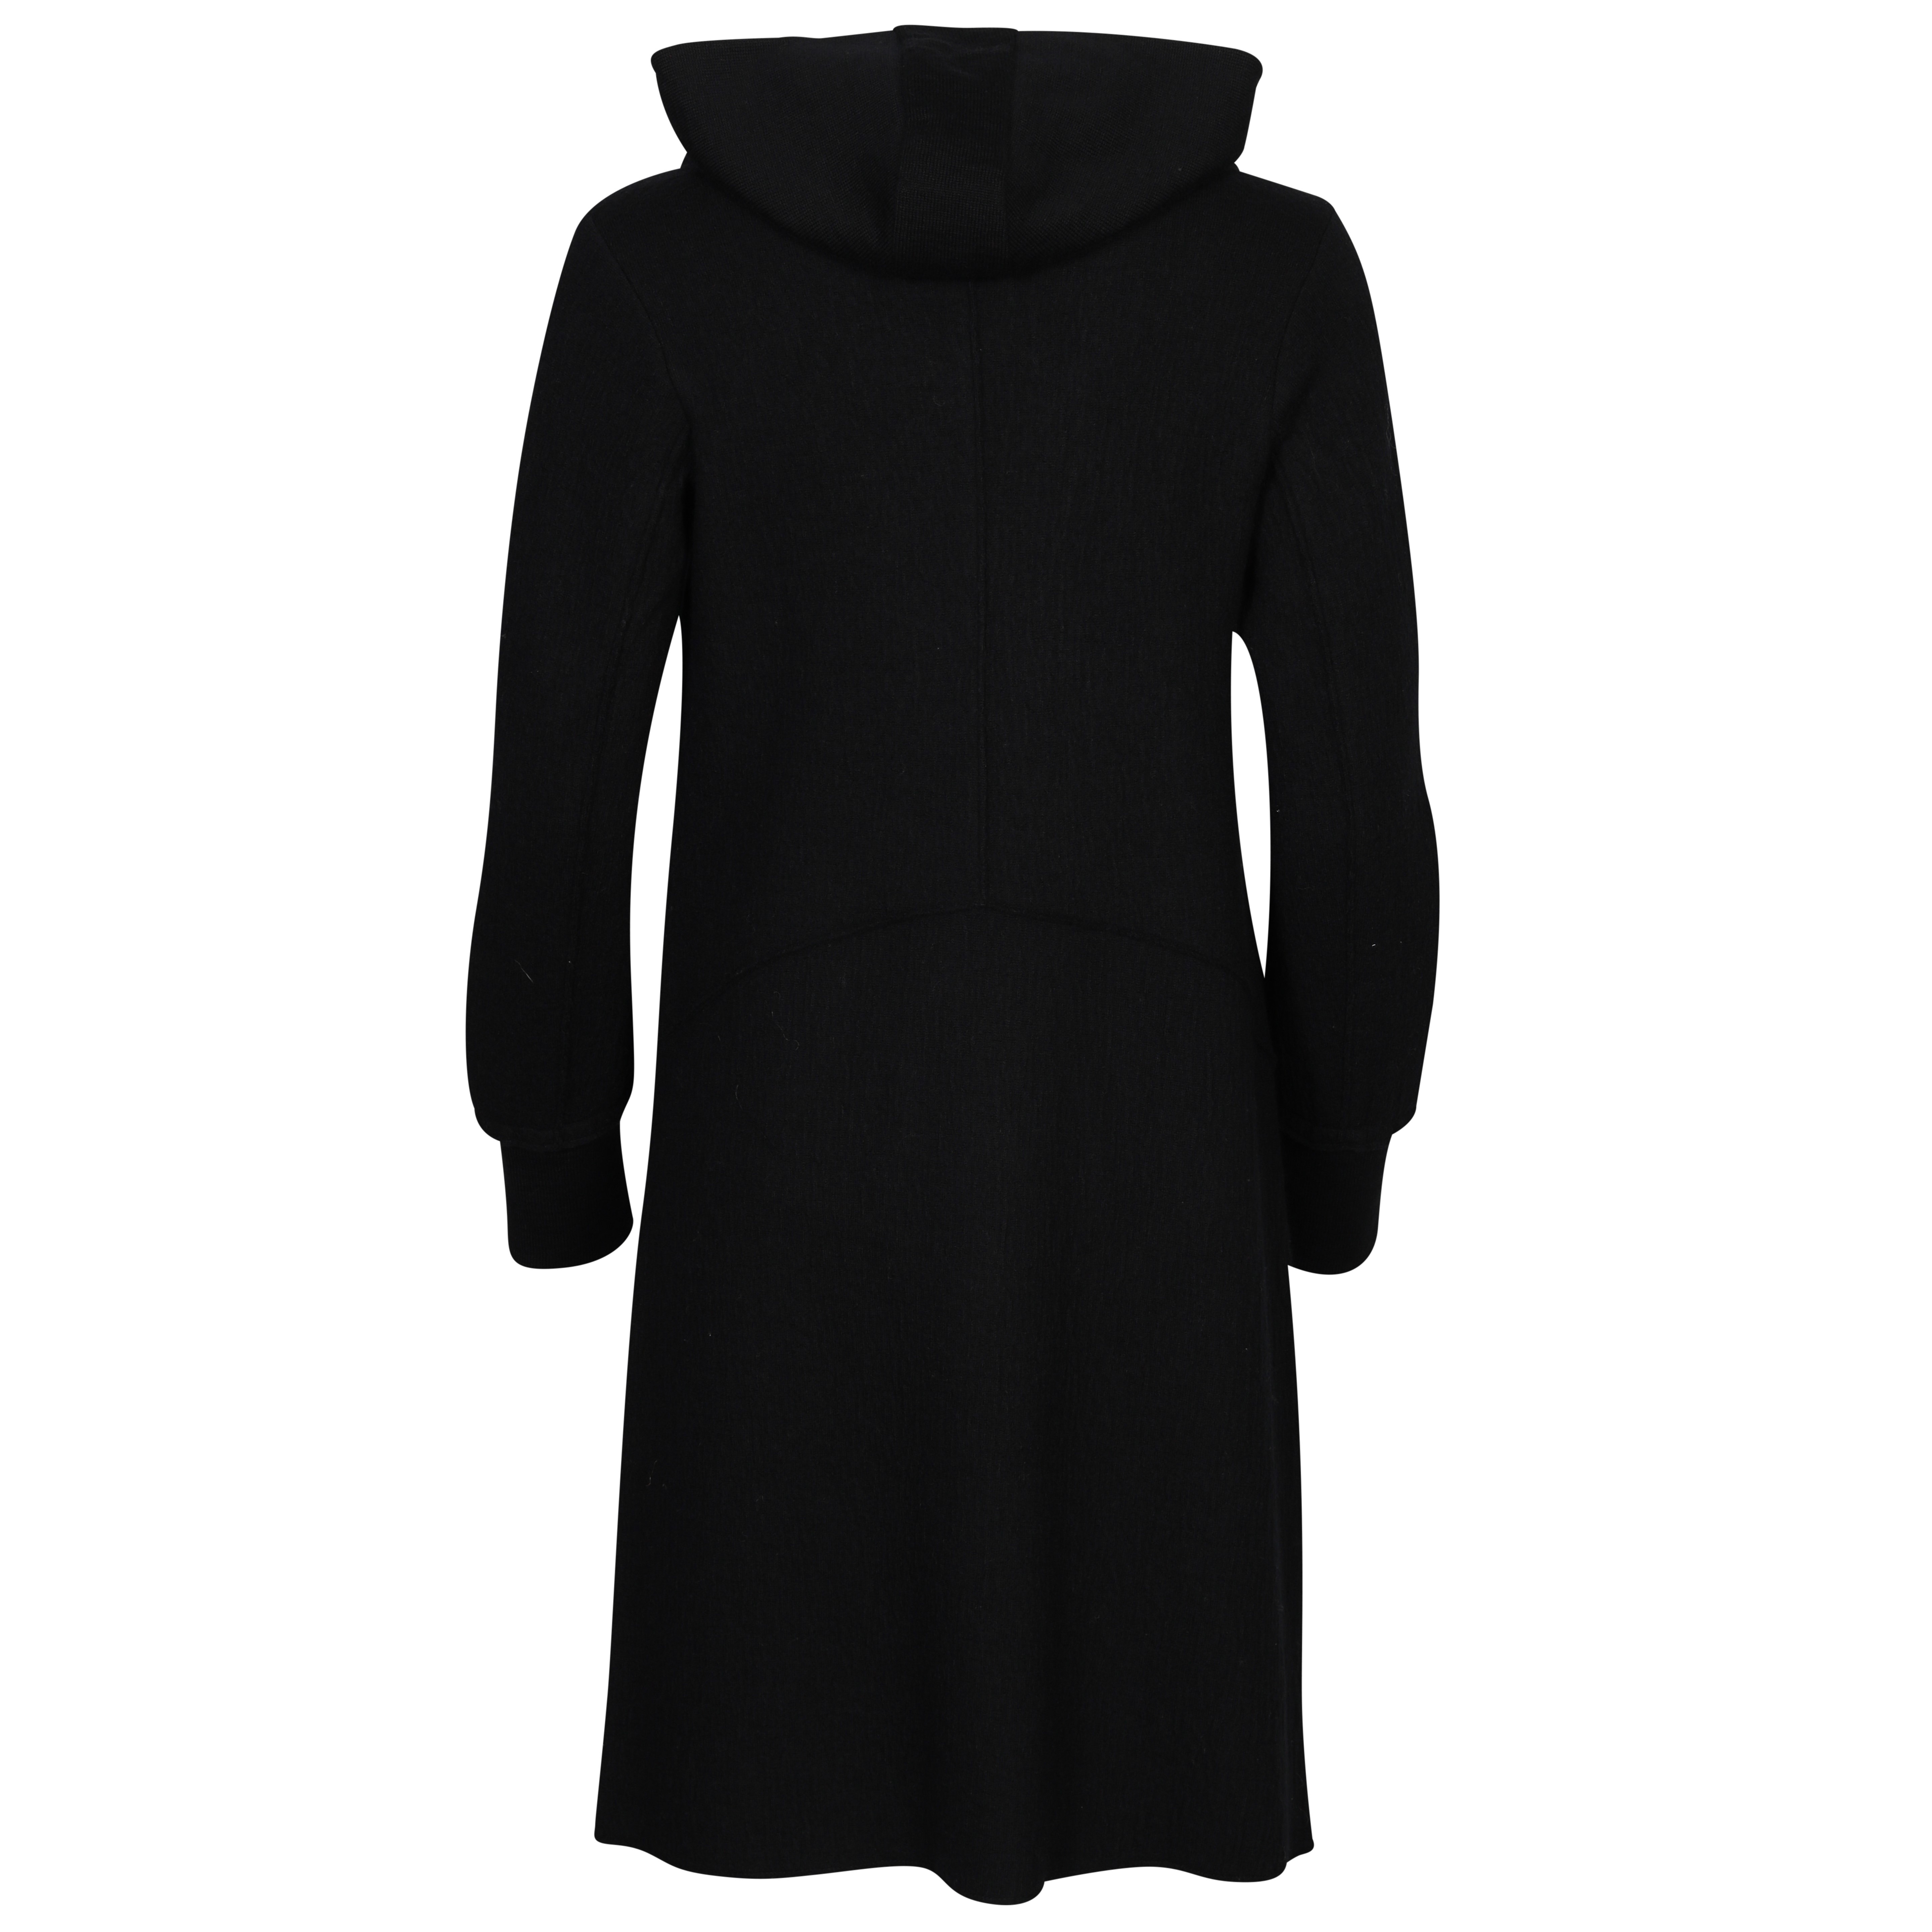 Transit Par Such Coat in Black With Detachable Hood S